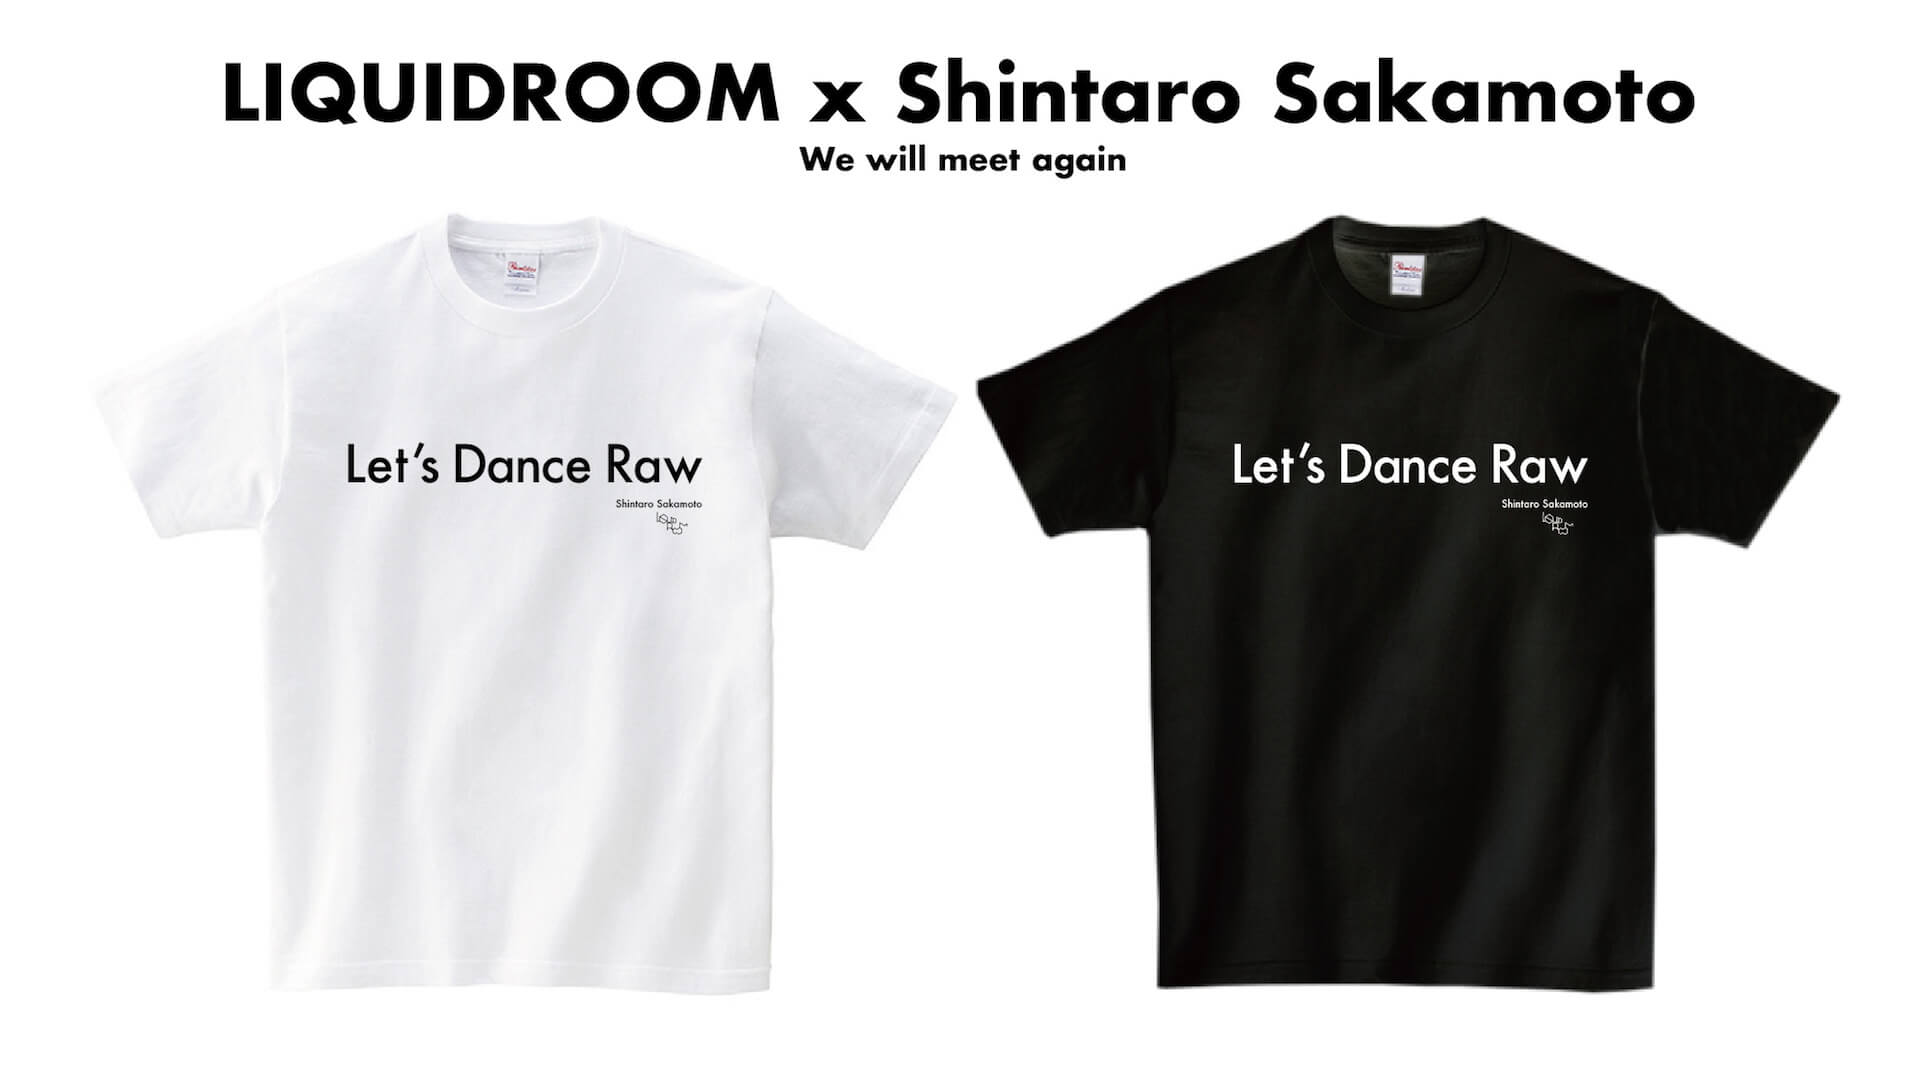 〈We will meet again〉──LIQUIDROOMが電気グルーヴ、坂本慎太郎とのコラボTシャツを受注販売開始 music200501-liquidroom-4